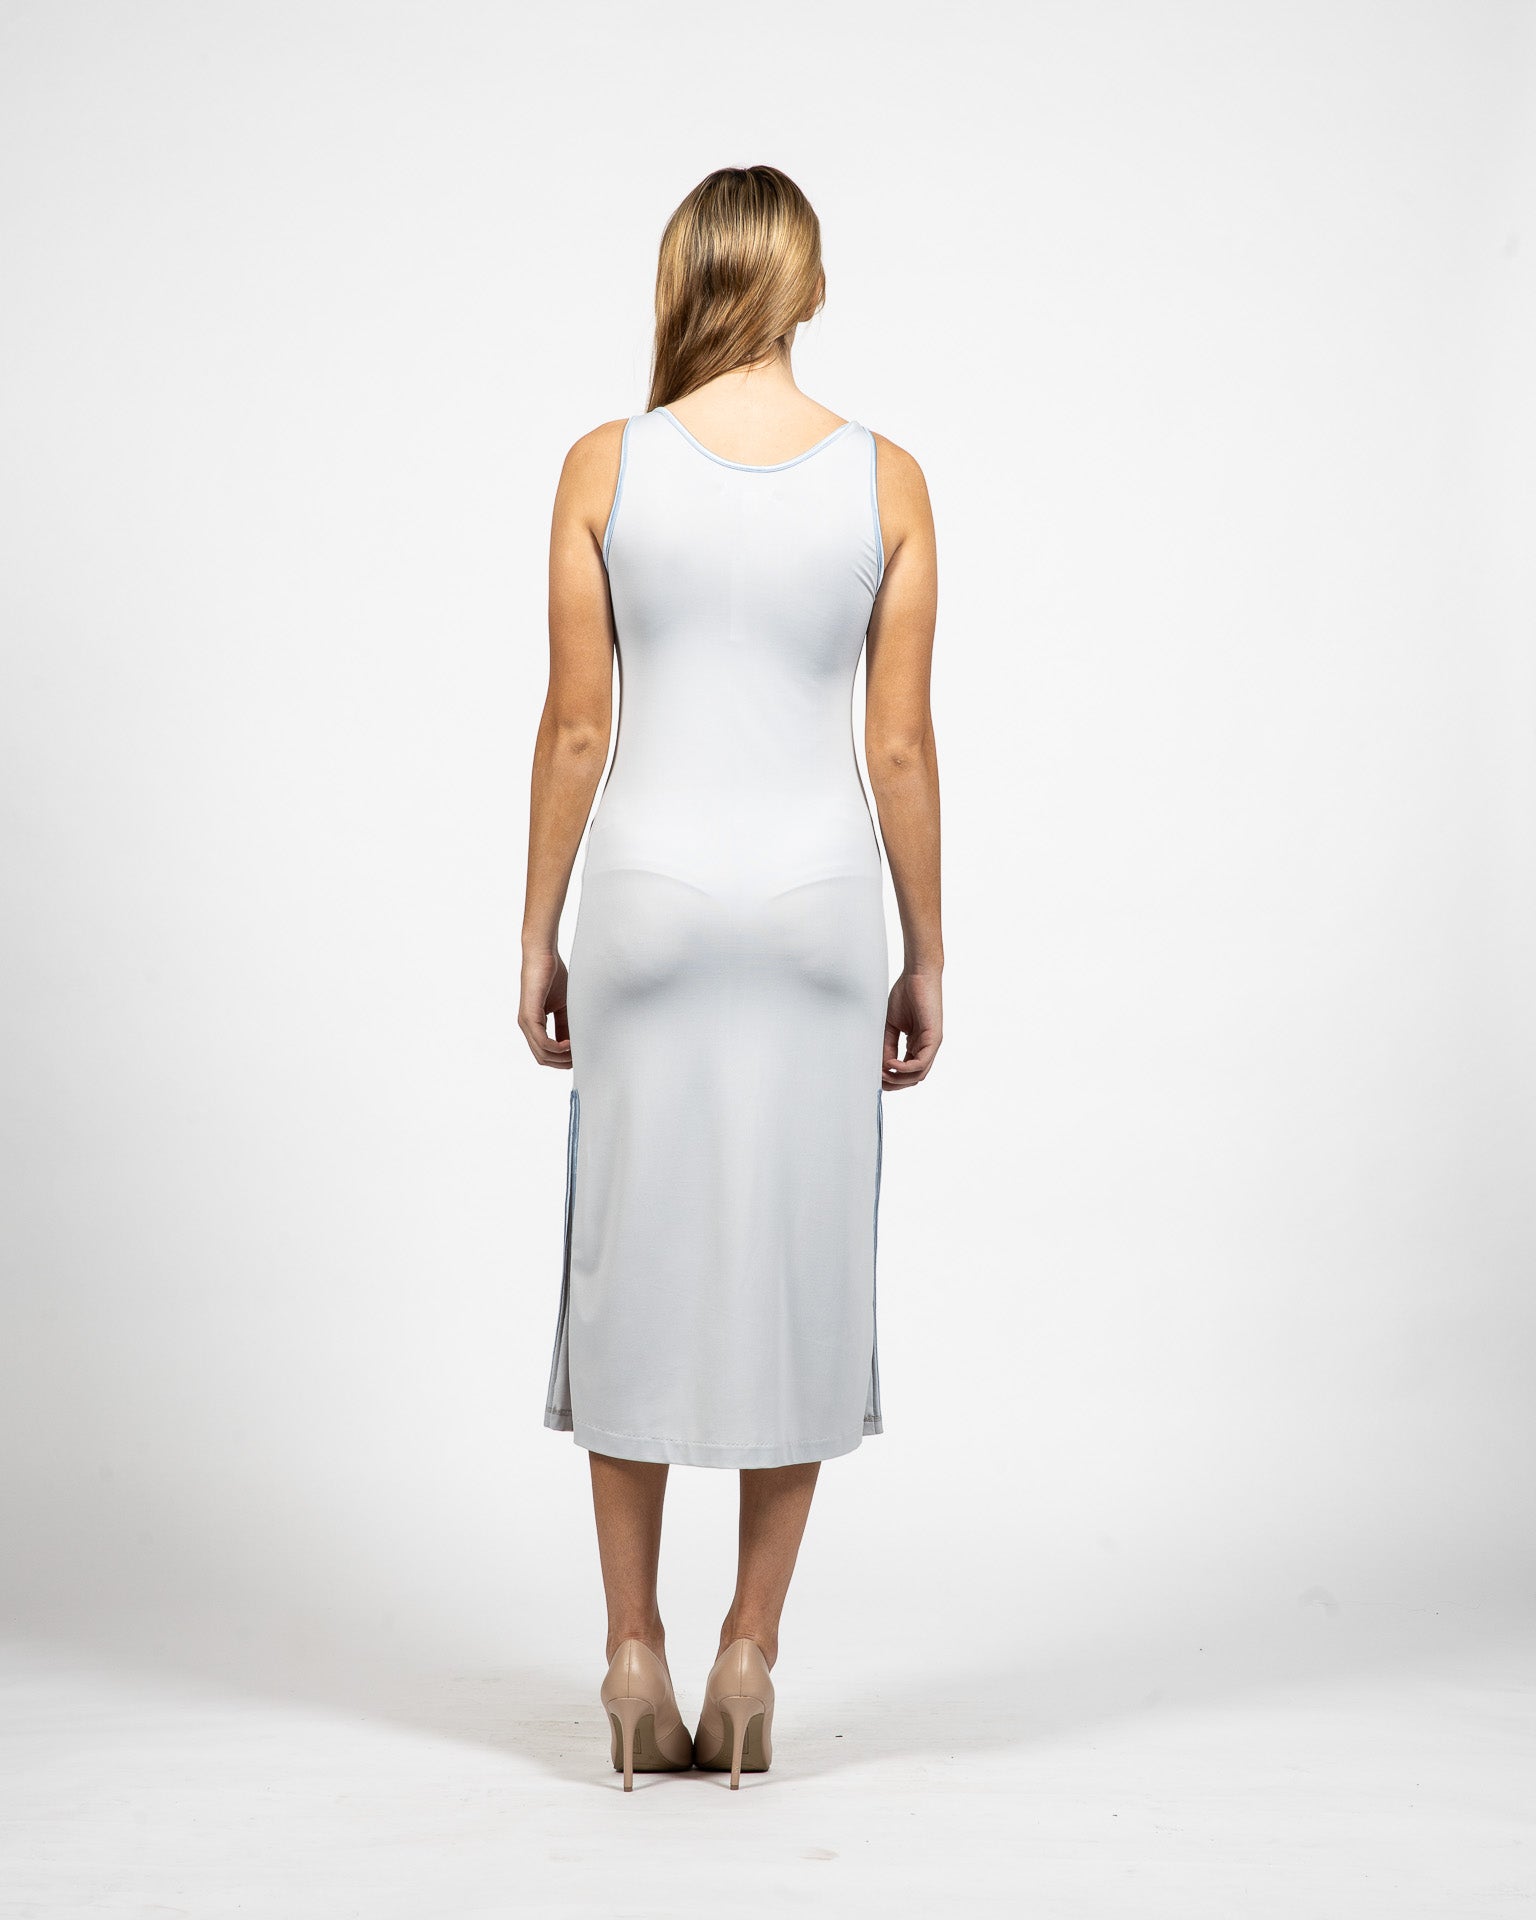 V - Neck Grey Dress - Back View - Samuel Vartan